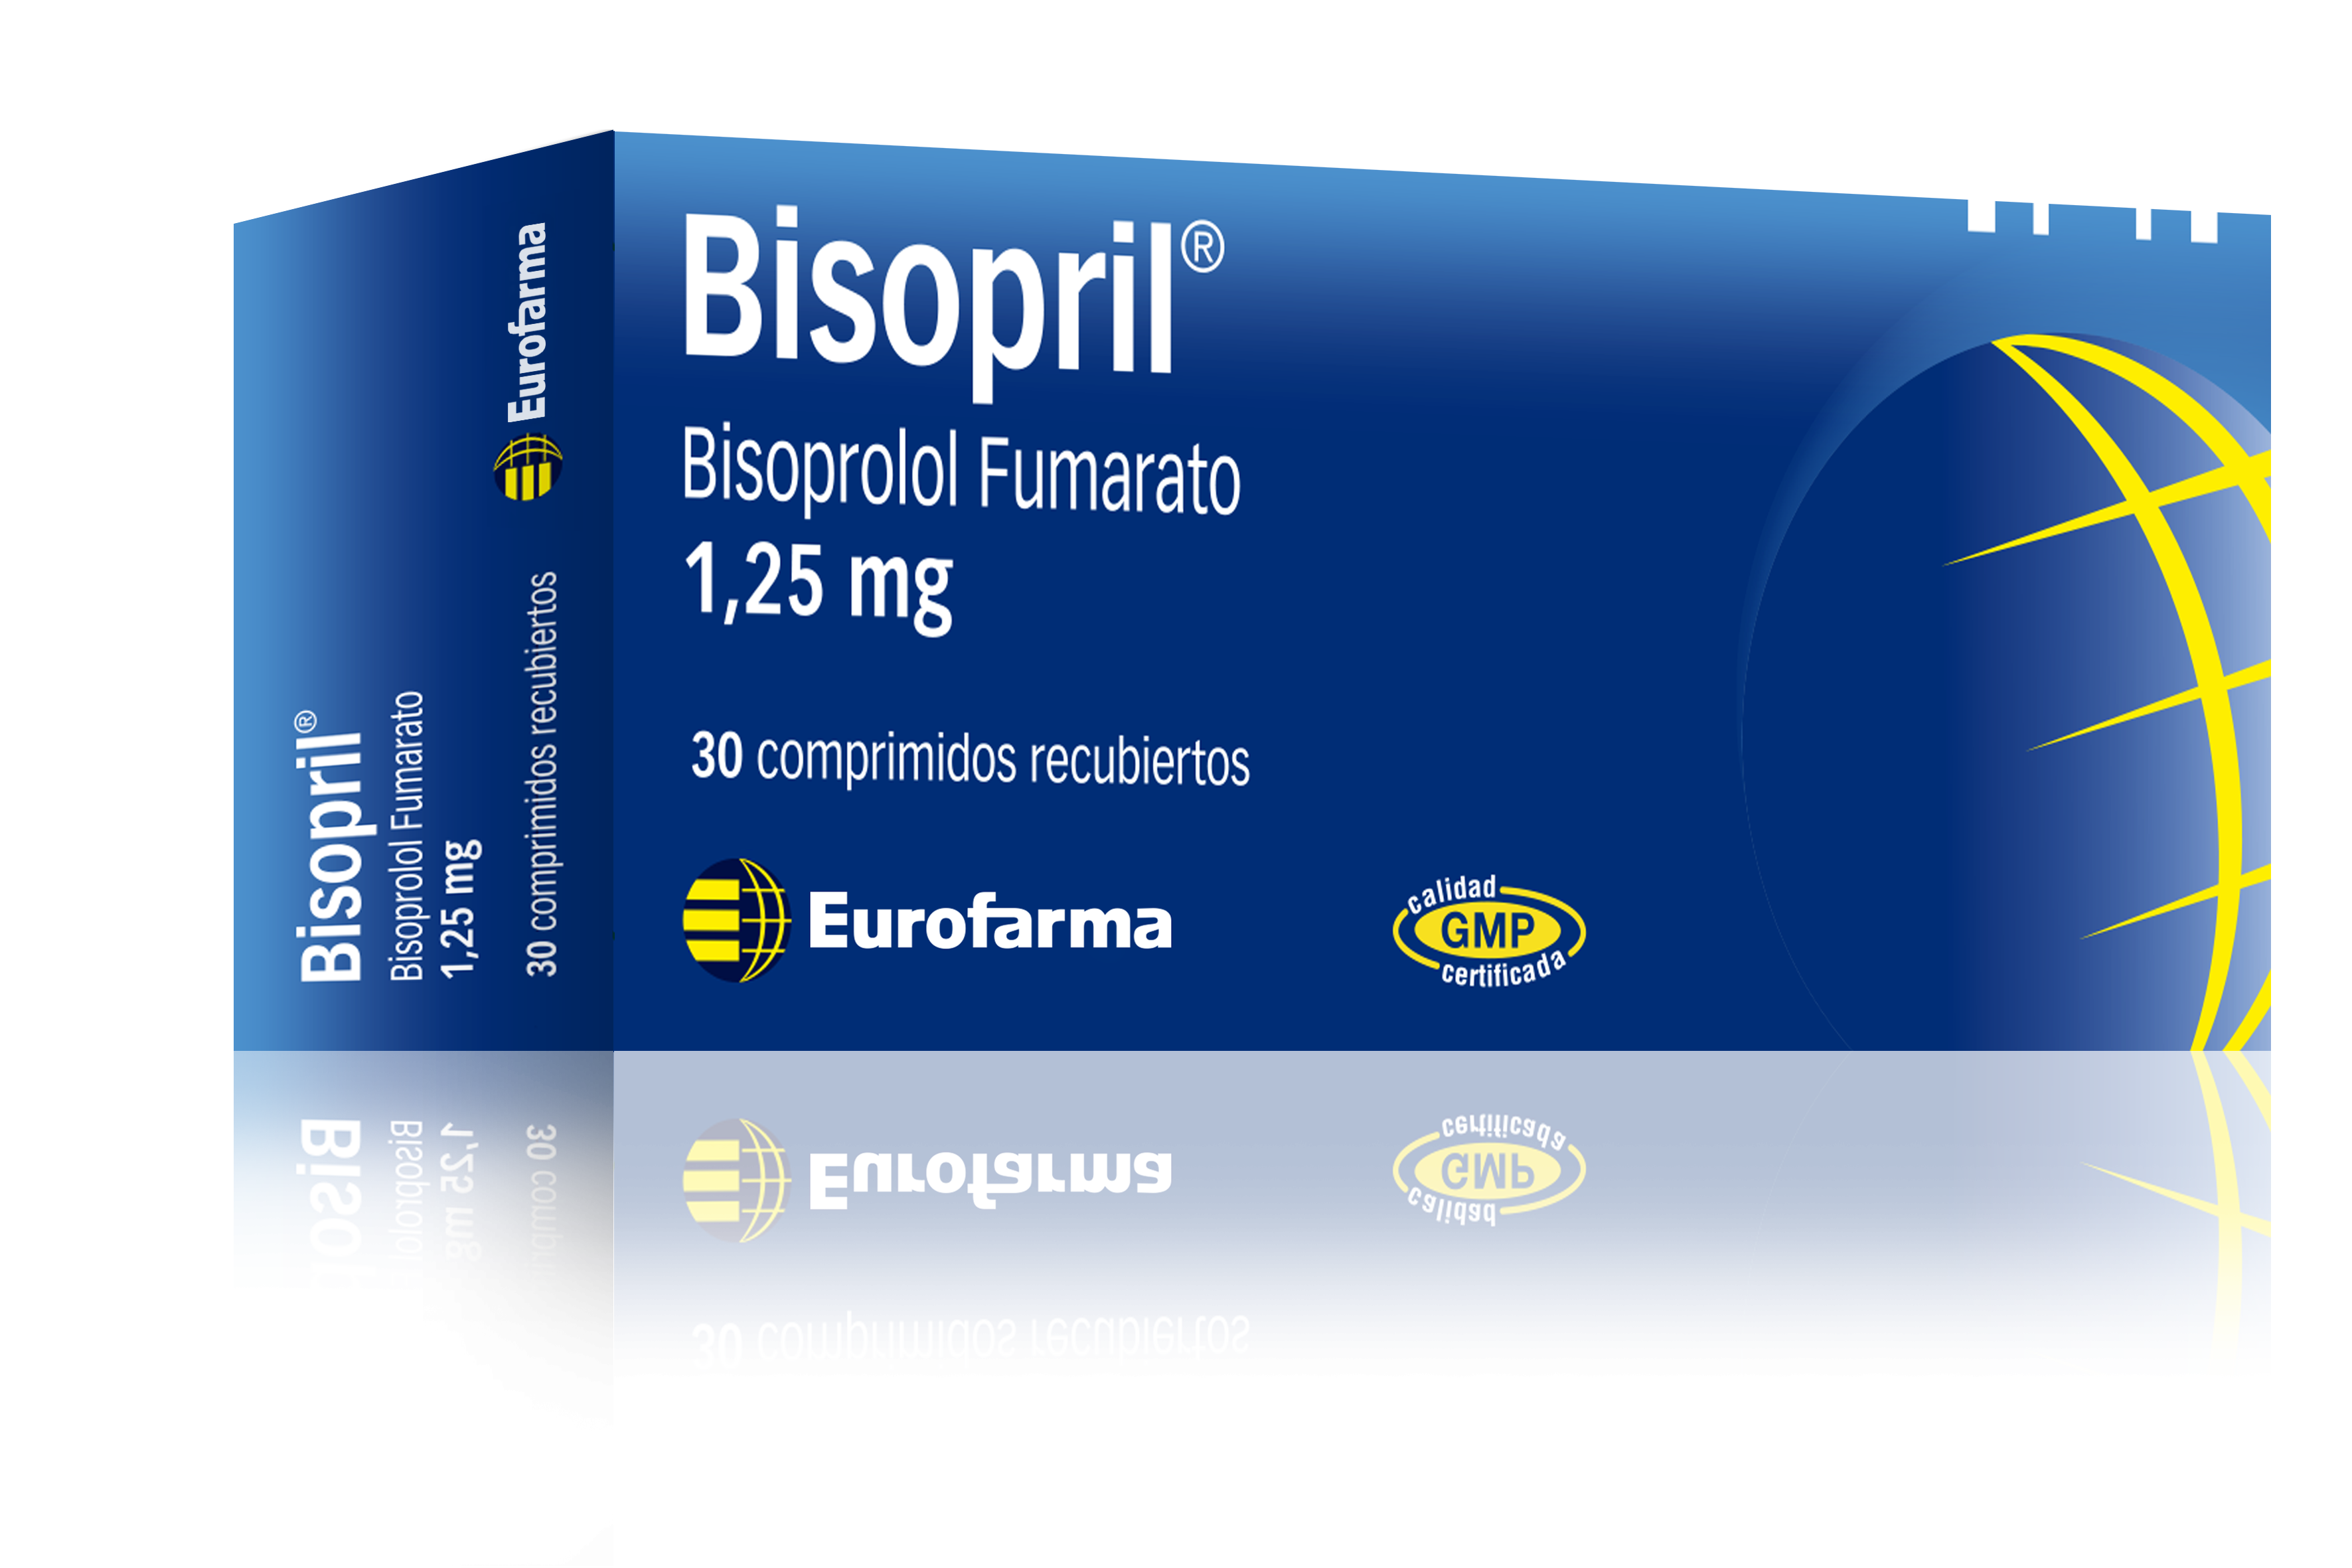 Bisopril 1,25 mg. (Bisoprolol Fumarato) comprimidos